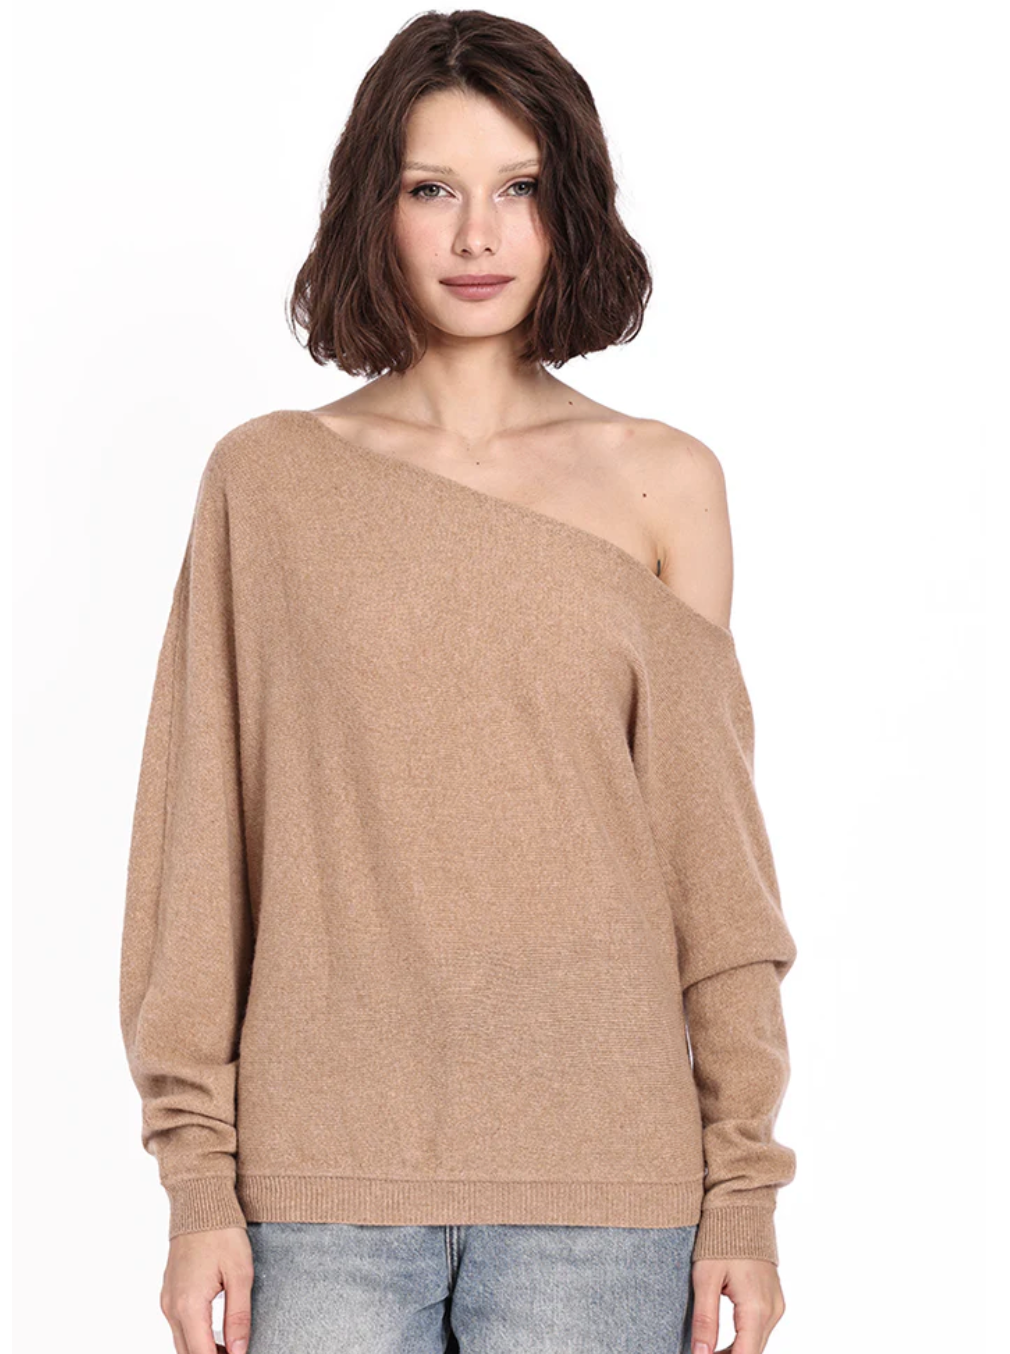 Cashmere Off the Shoulder Sweater | Camel-Sea Biscuit Del Mar